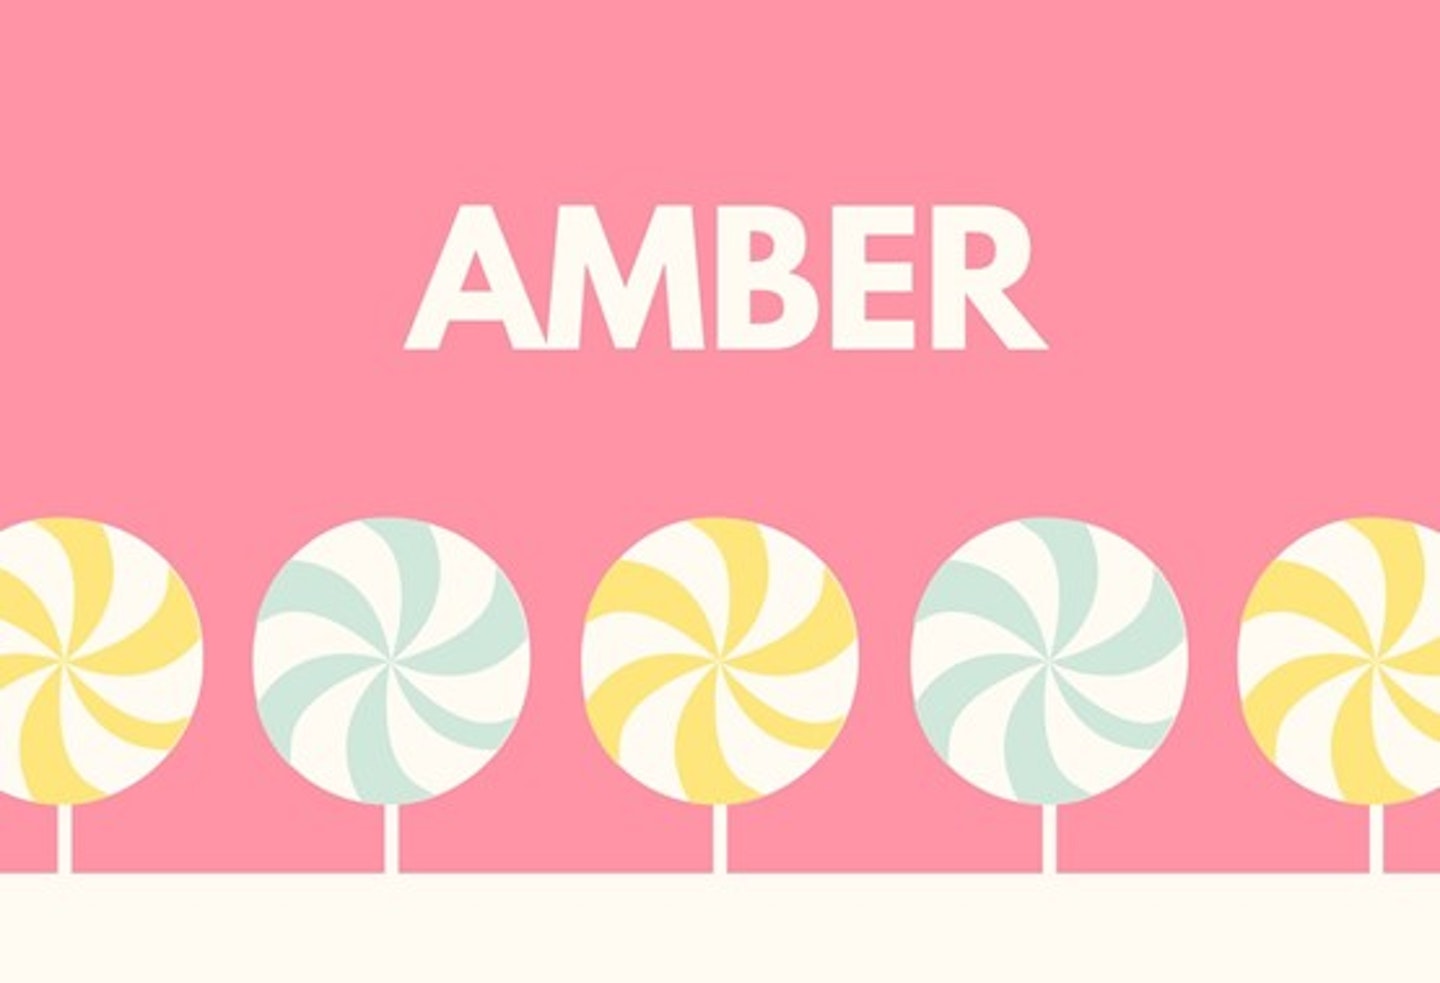 2) Amber